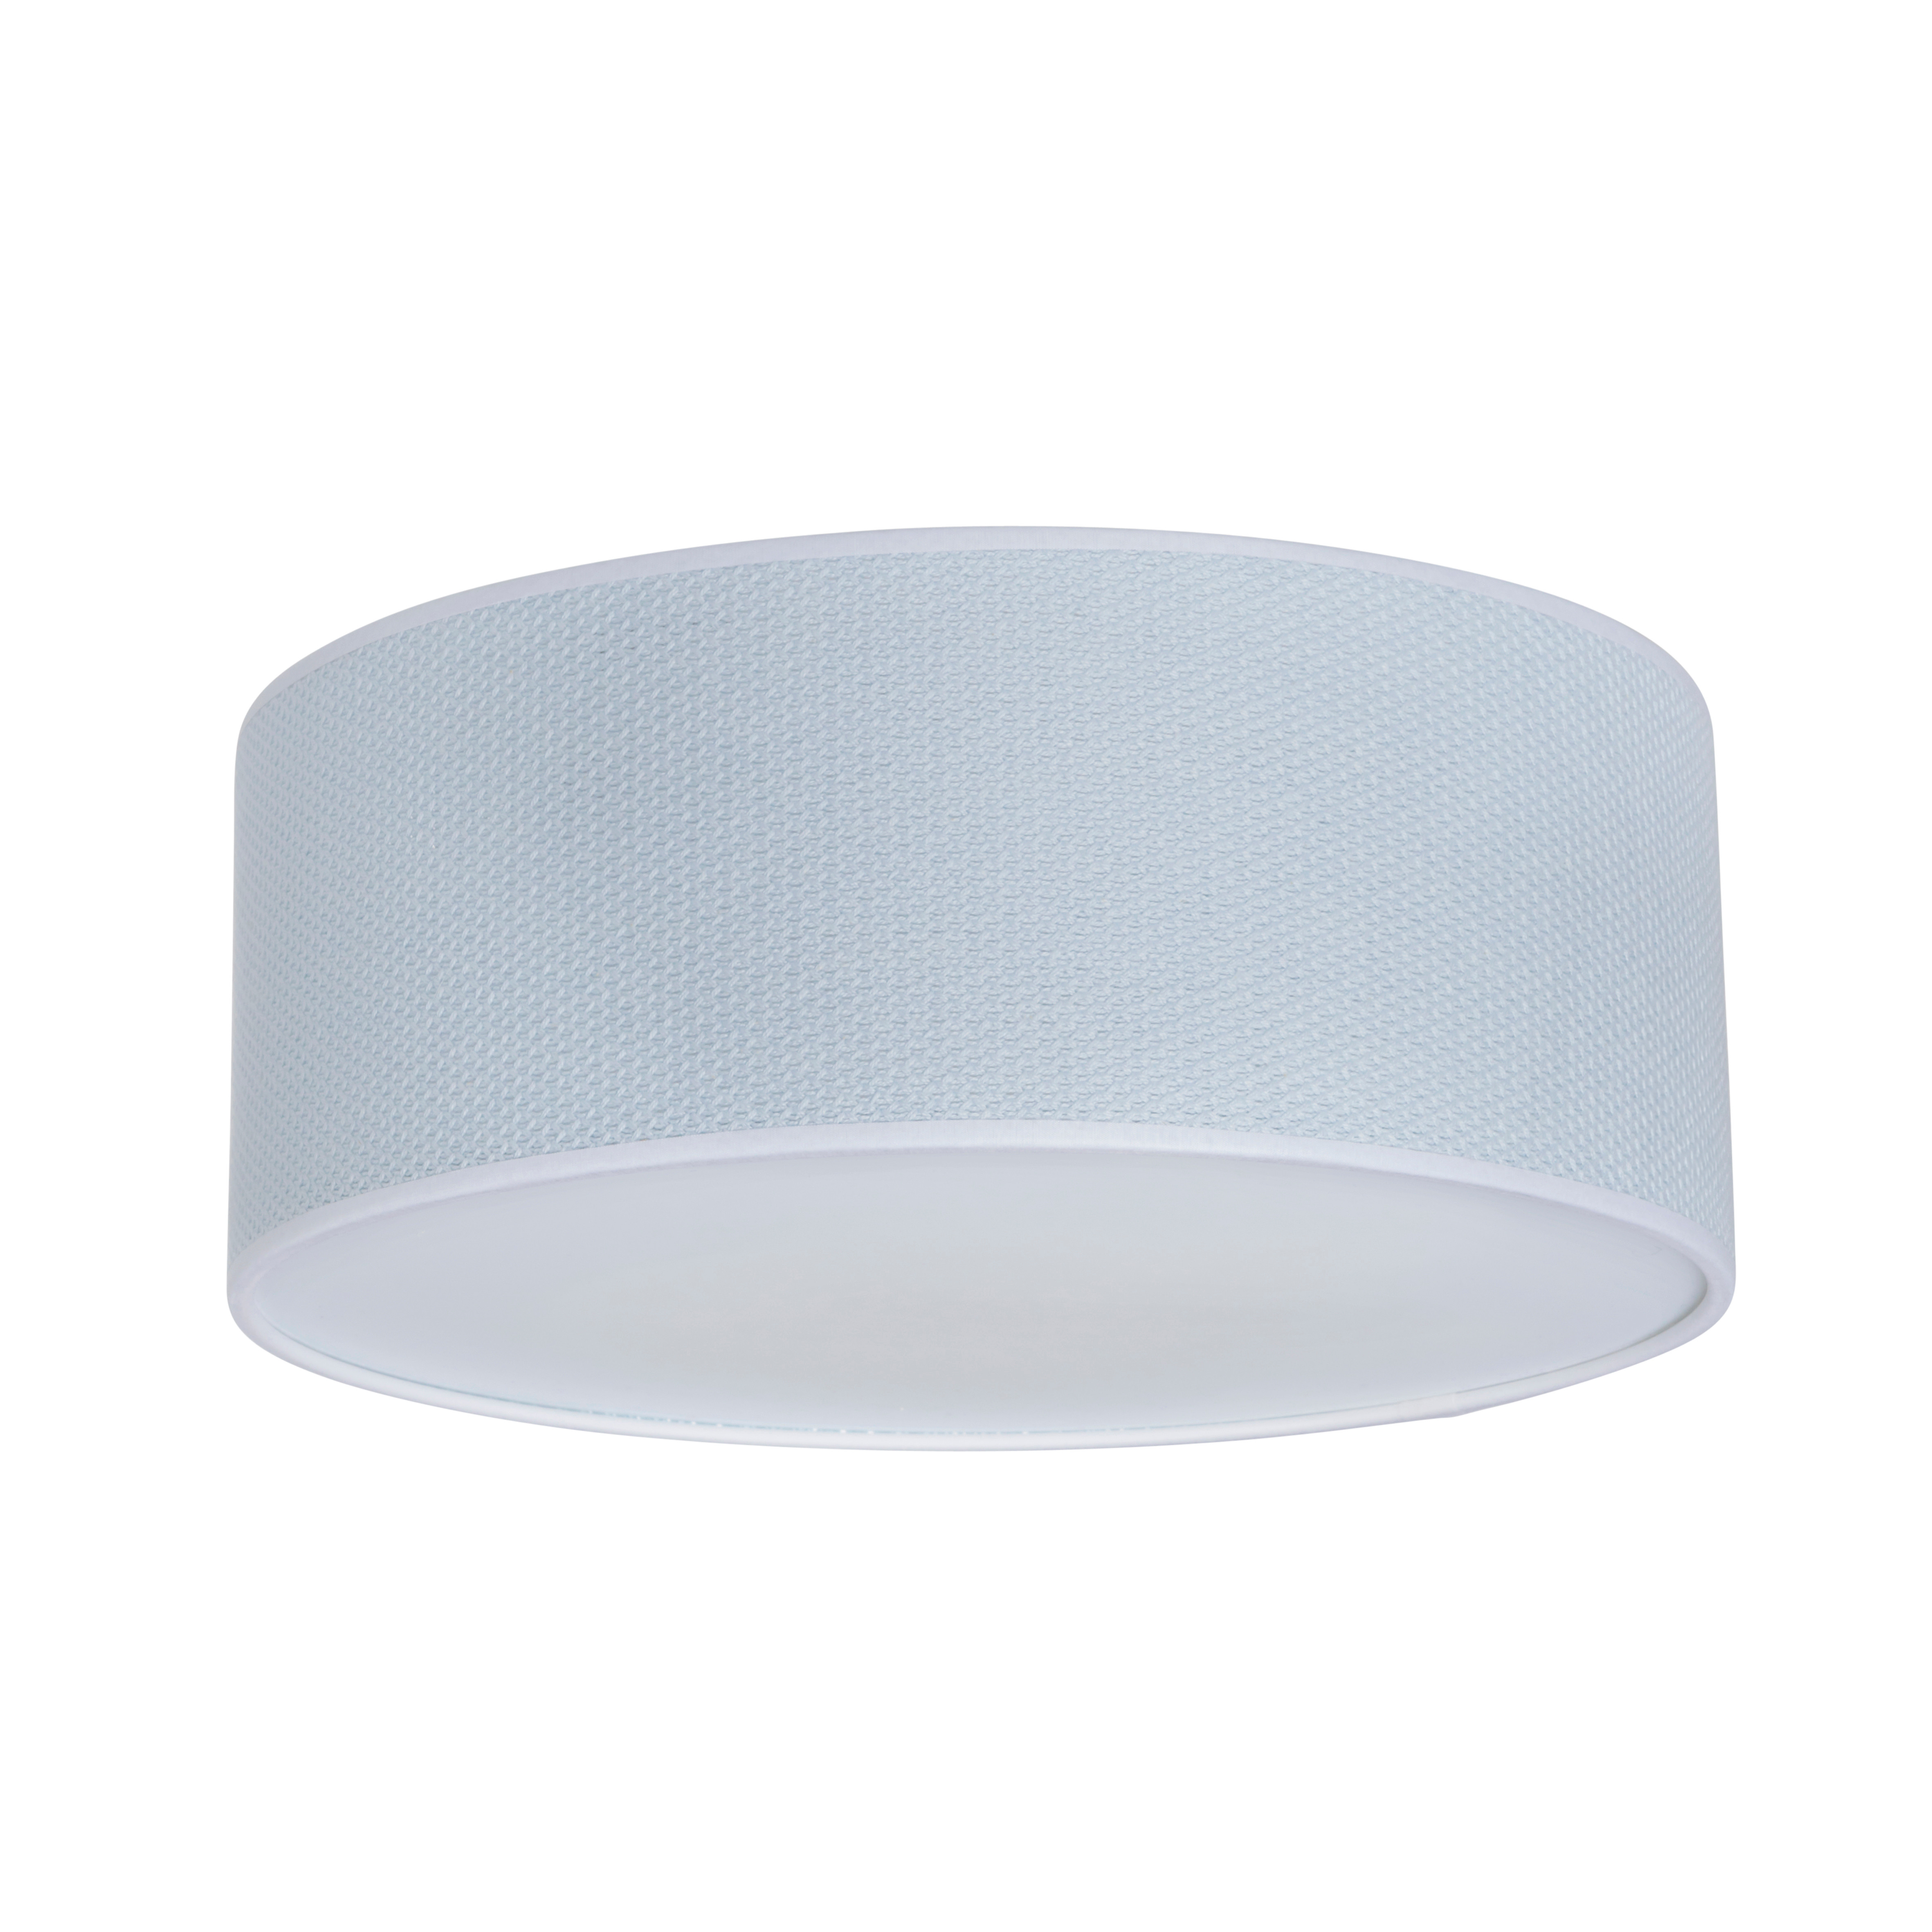 Ceiling lamp Classic powder blue - Ø35 cm